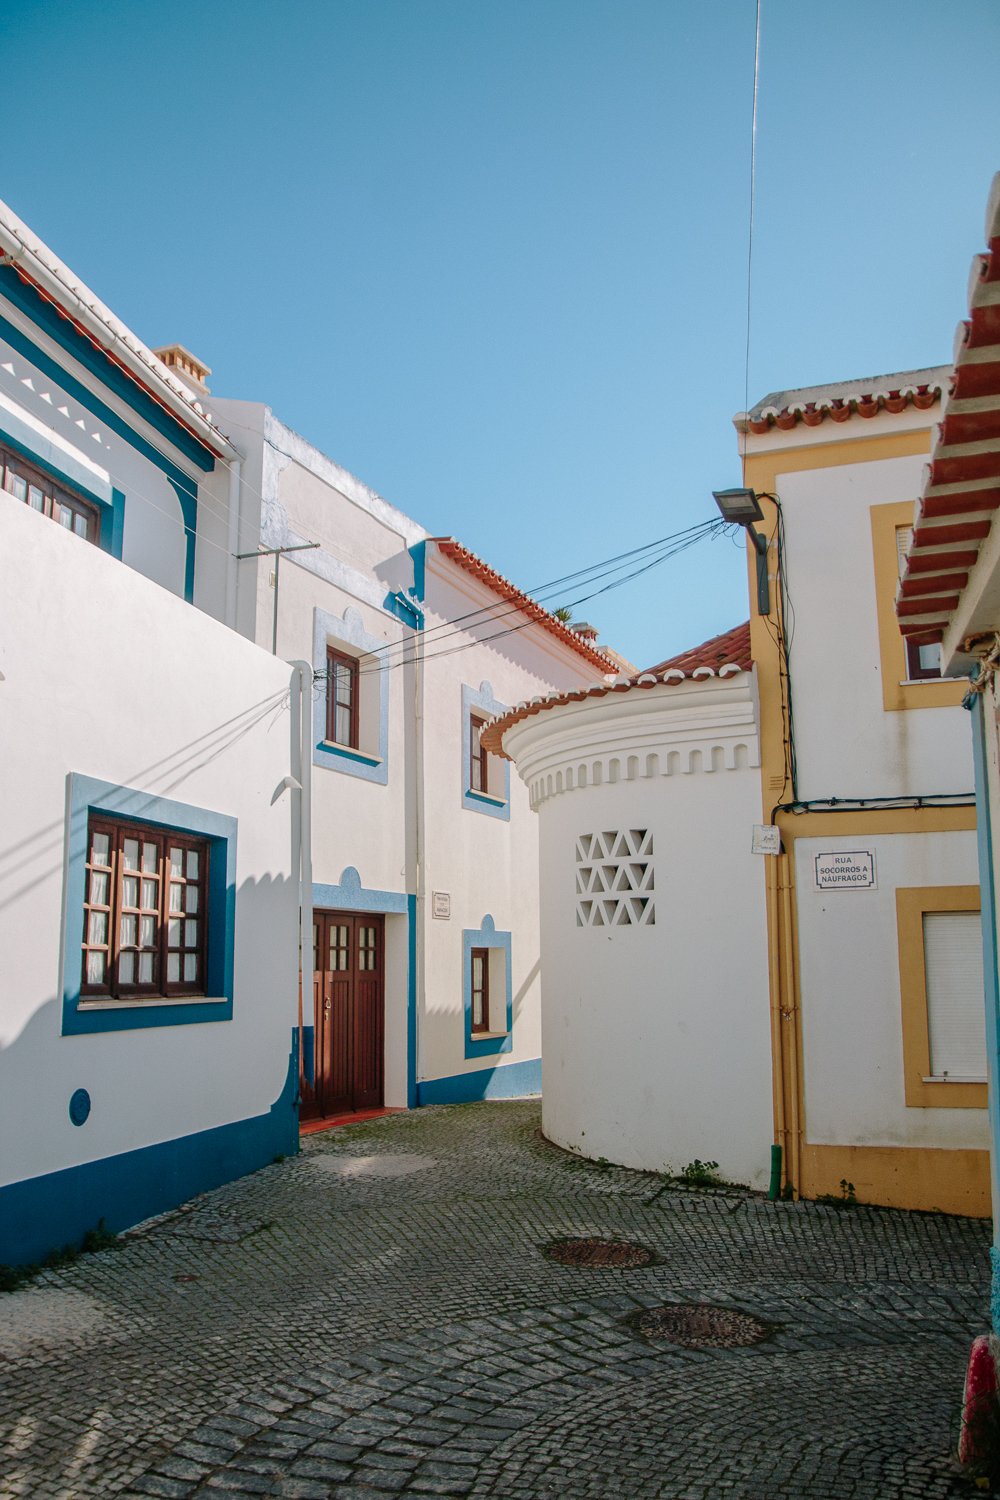 Vila Nova de Milfontes Street 11 Prettiest Small Towns in Alentejo Portugal - The Most Charming Villages in Alentejo - The Wildest Road Blog.jpeg